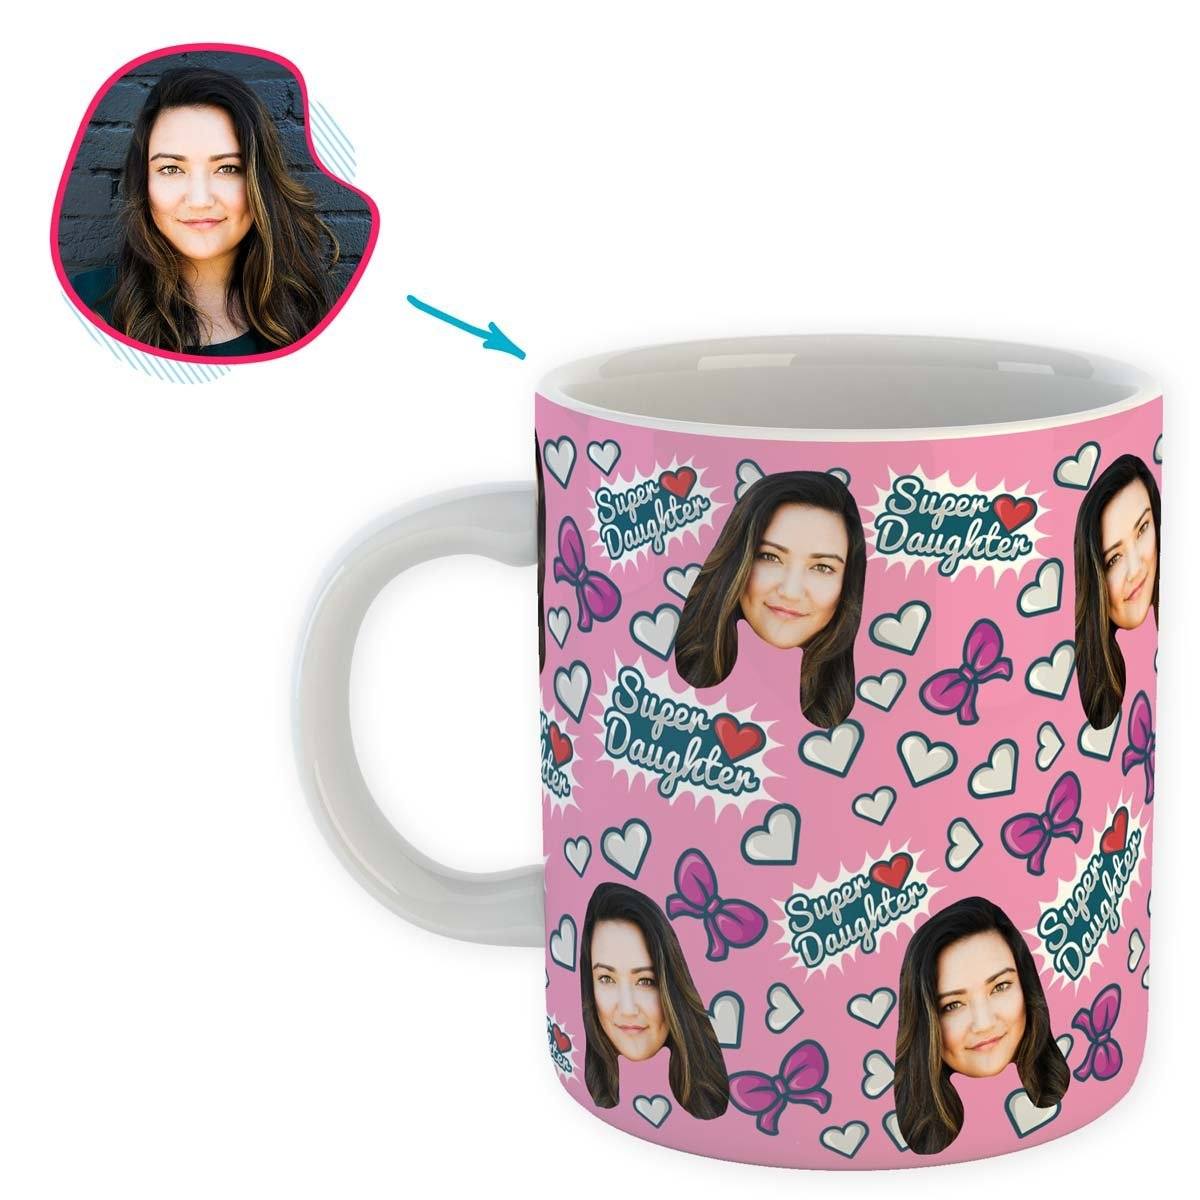 Super Daughter Personalized Mug